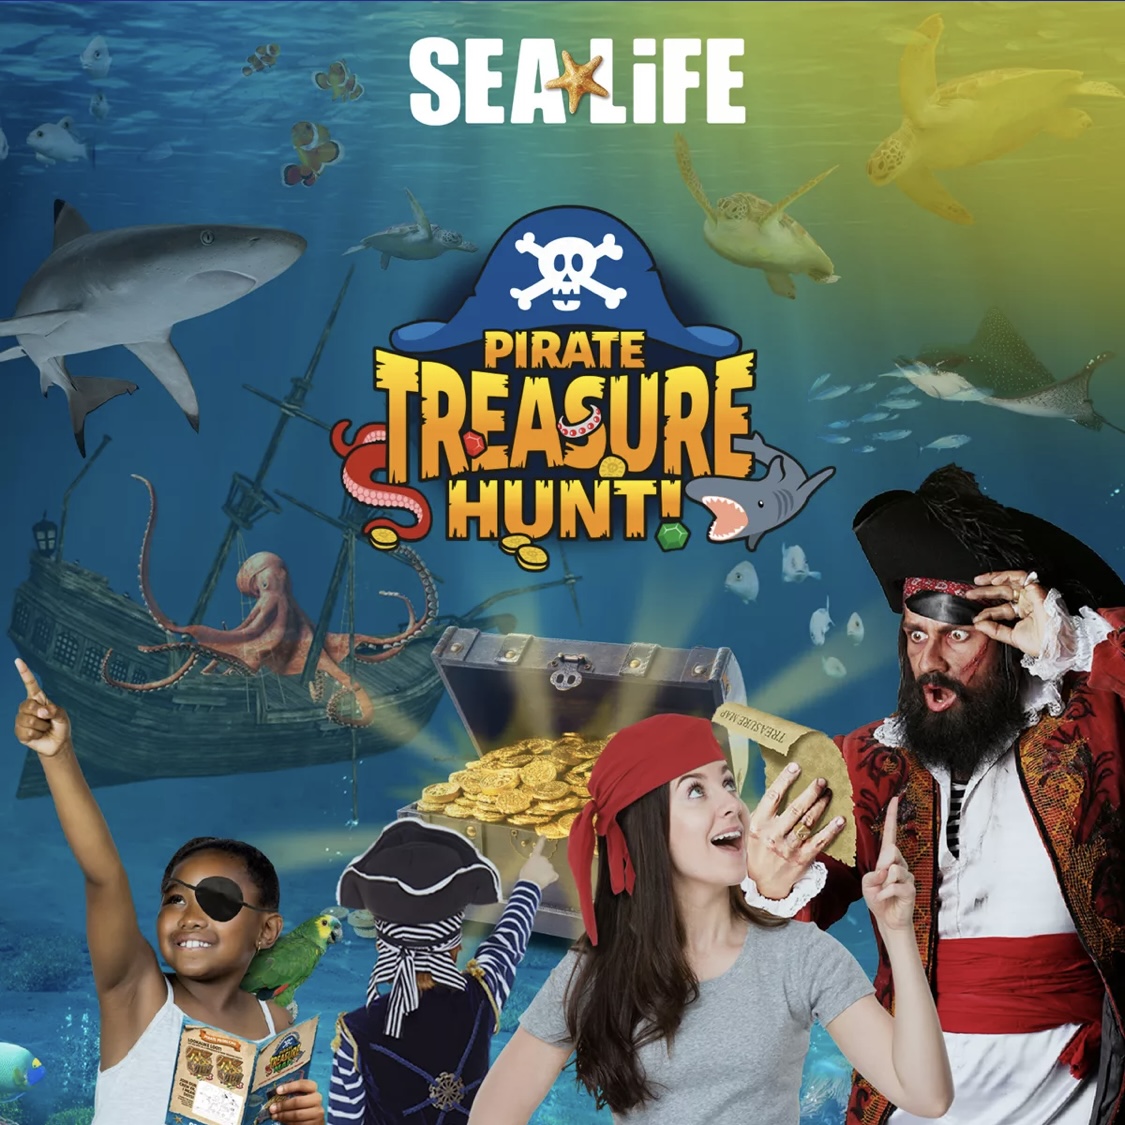 Pirate Treasure Hunt SEALIFE Weymouth